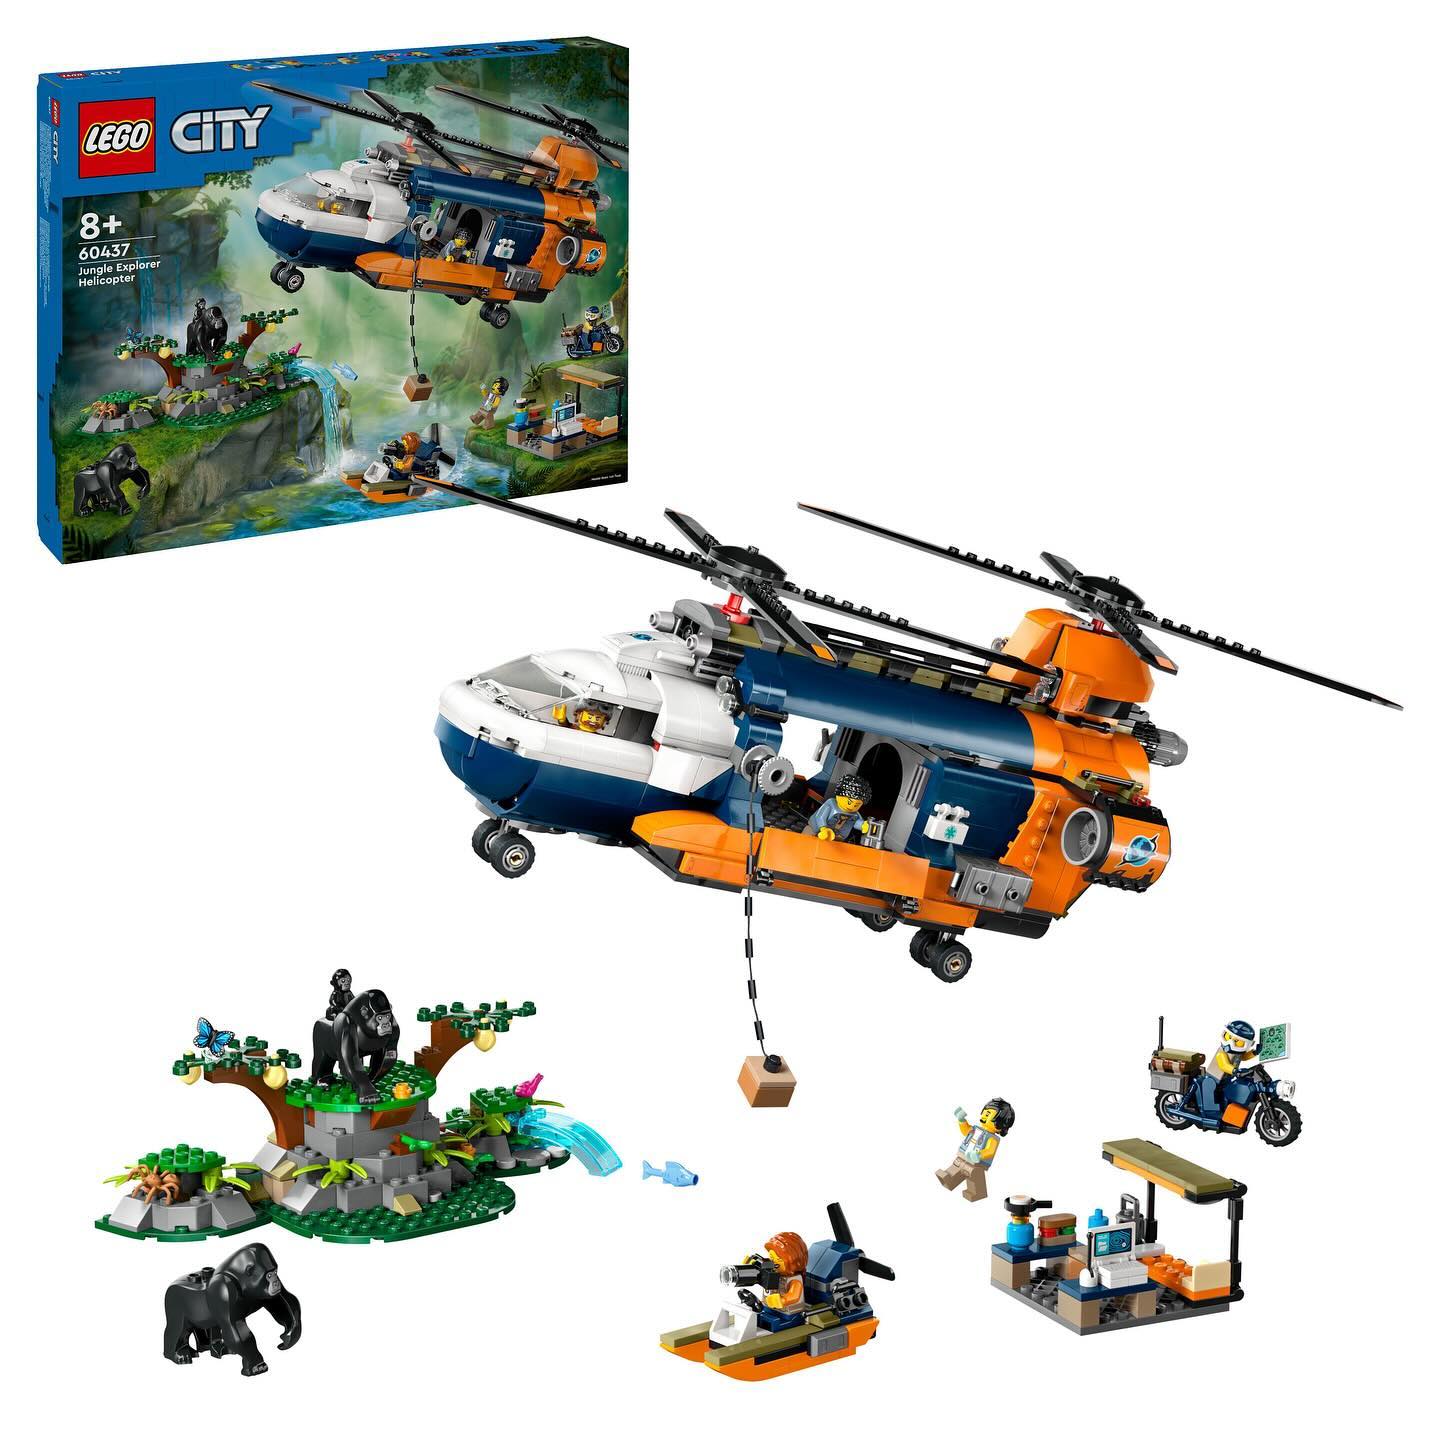 LEGO City Jungle Explorer Helicopter 60437